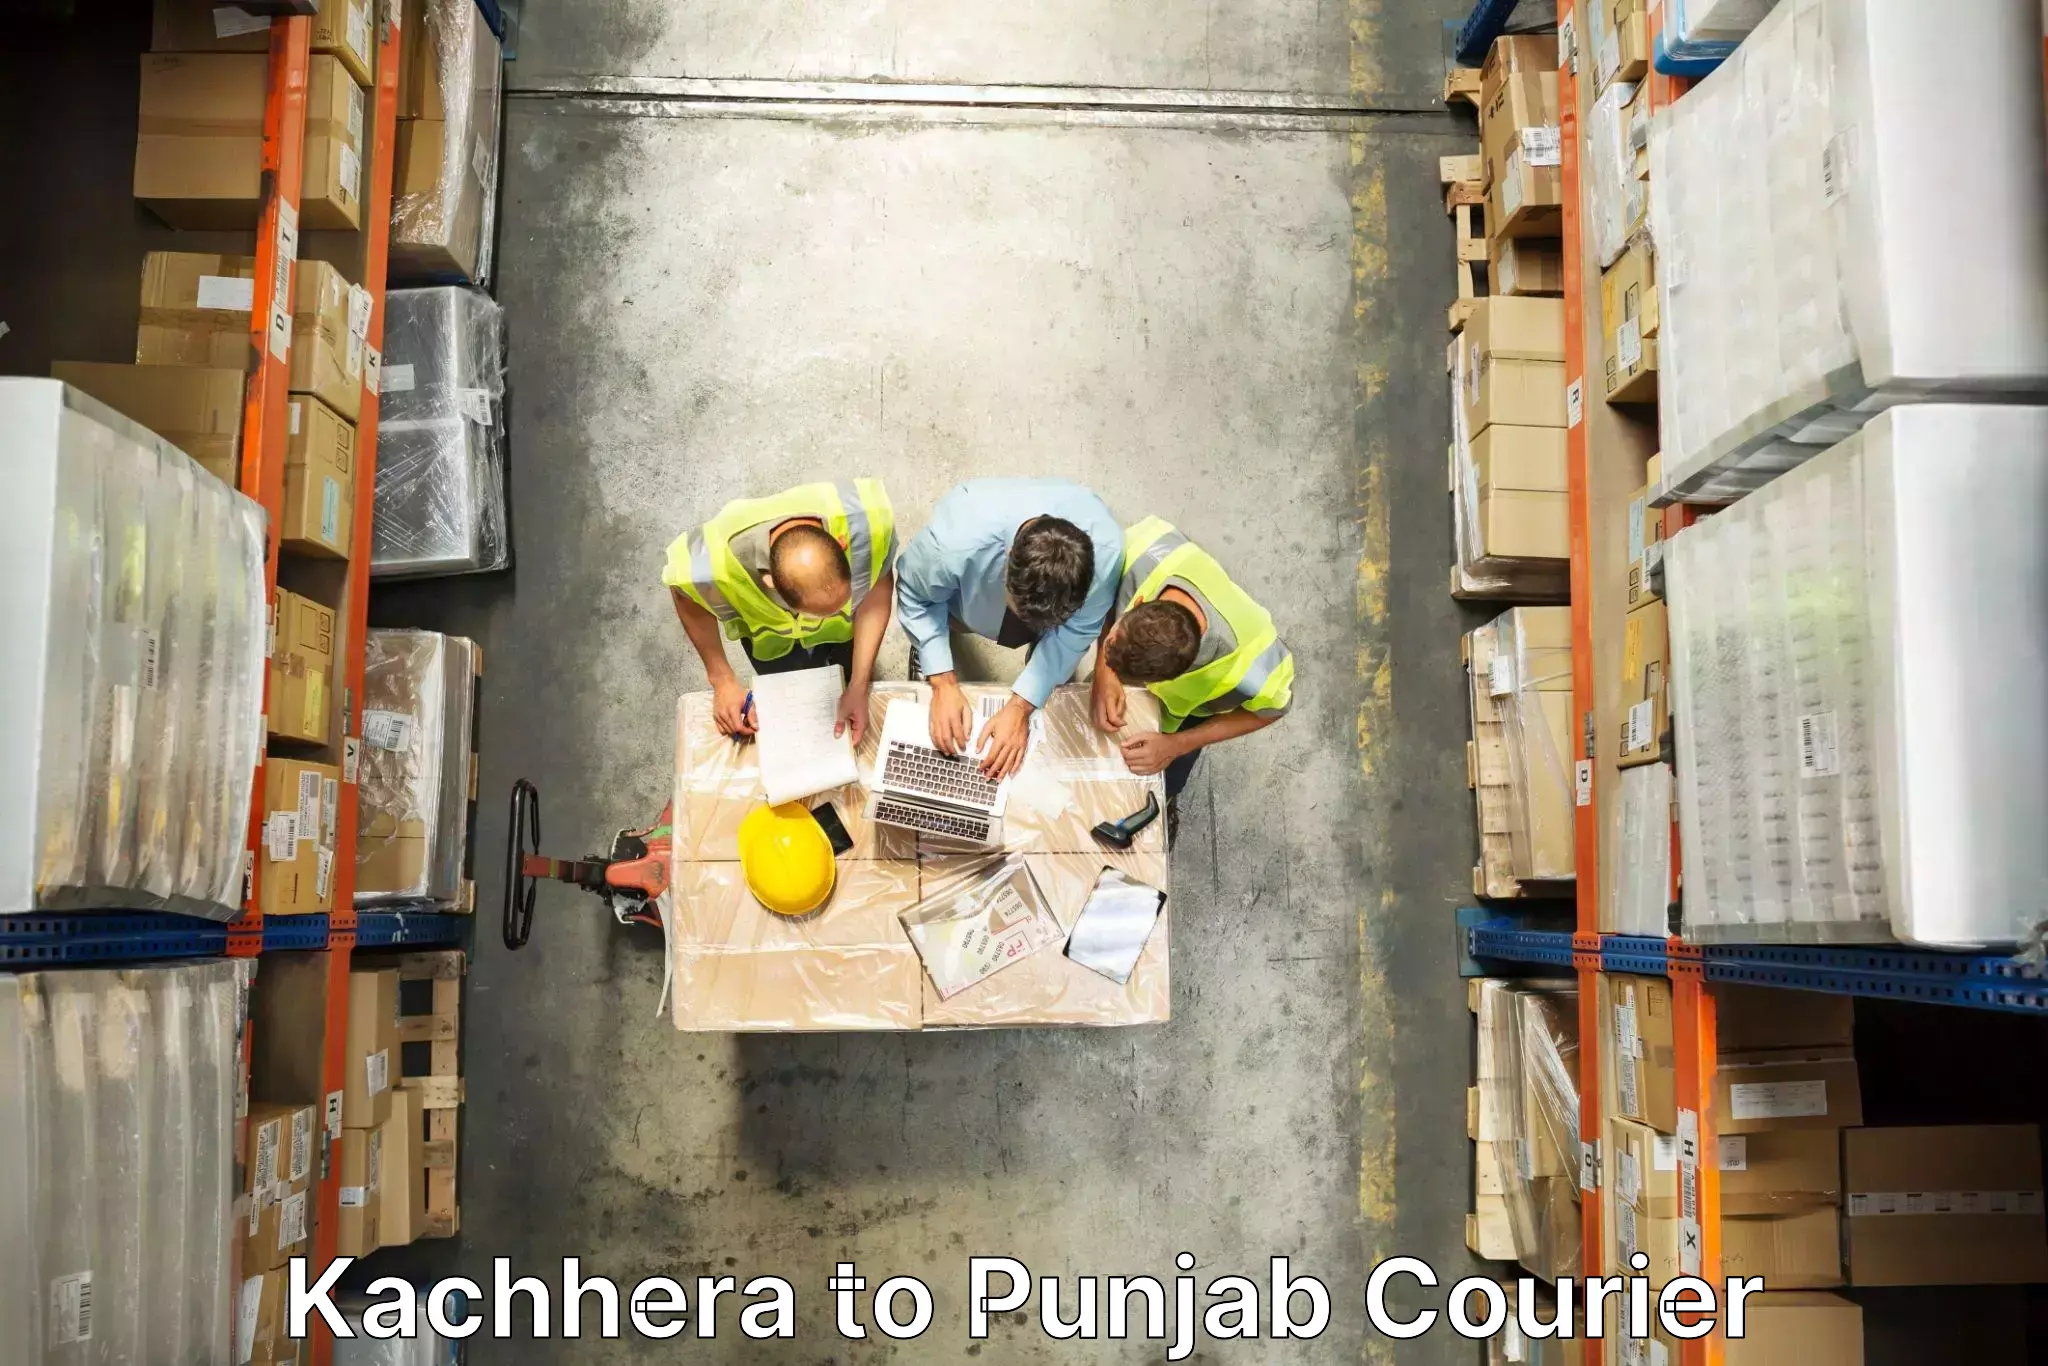 Quality moving company Kachhera to Mohali